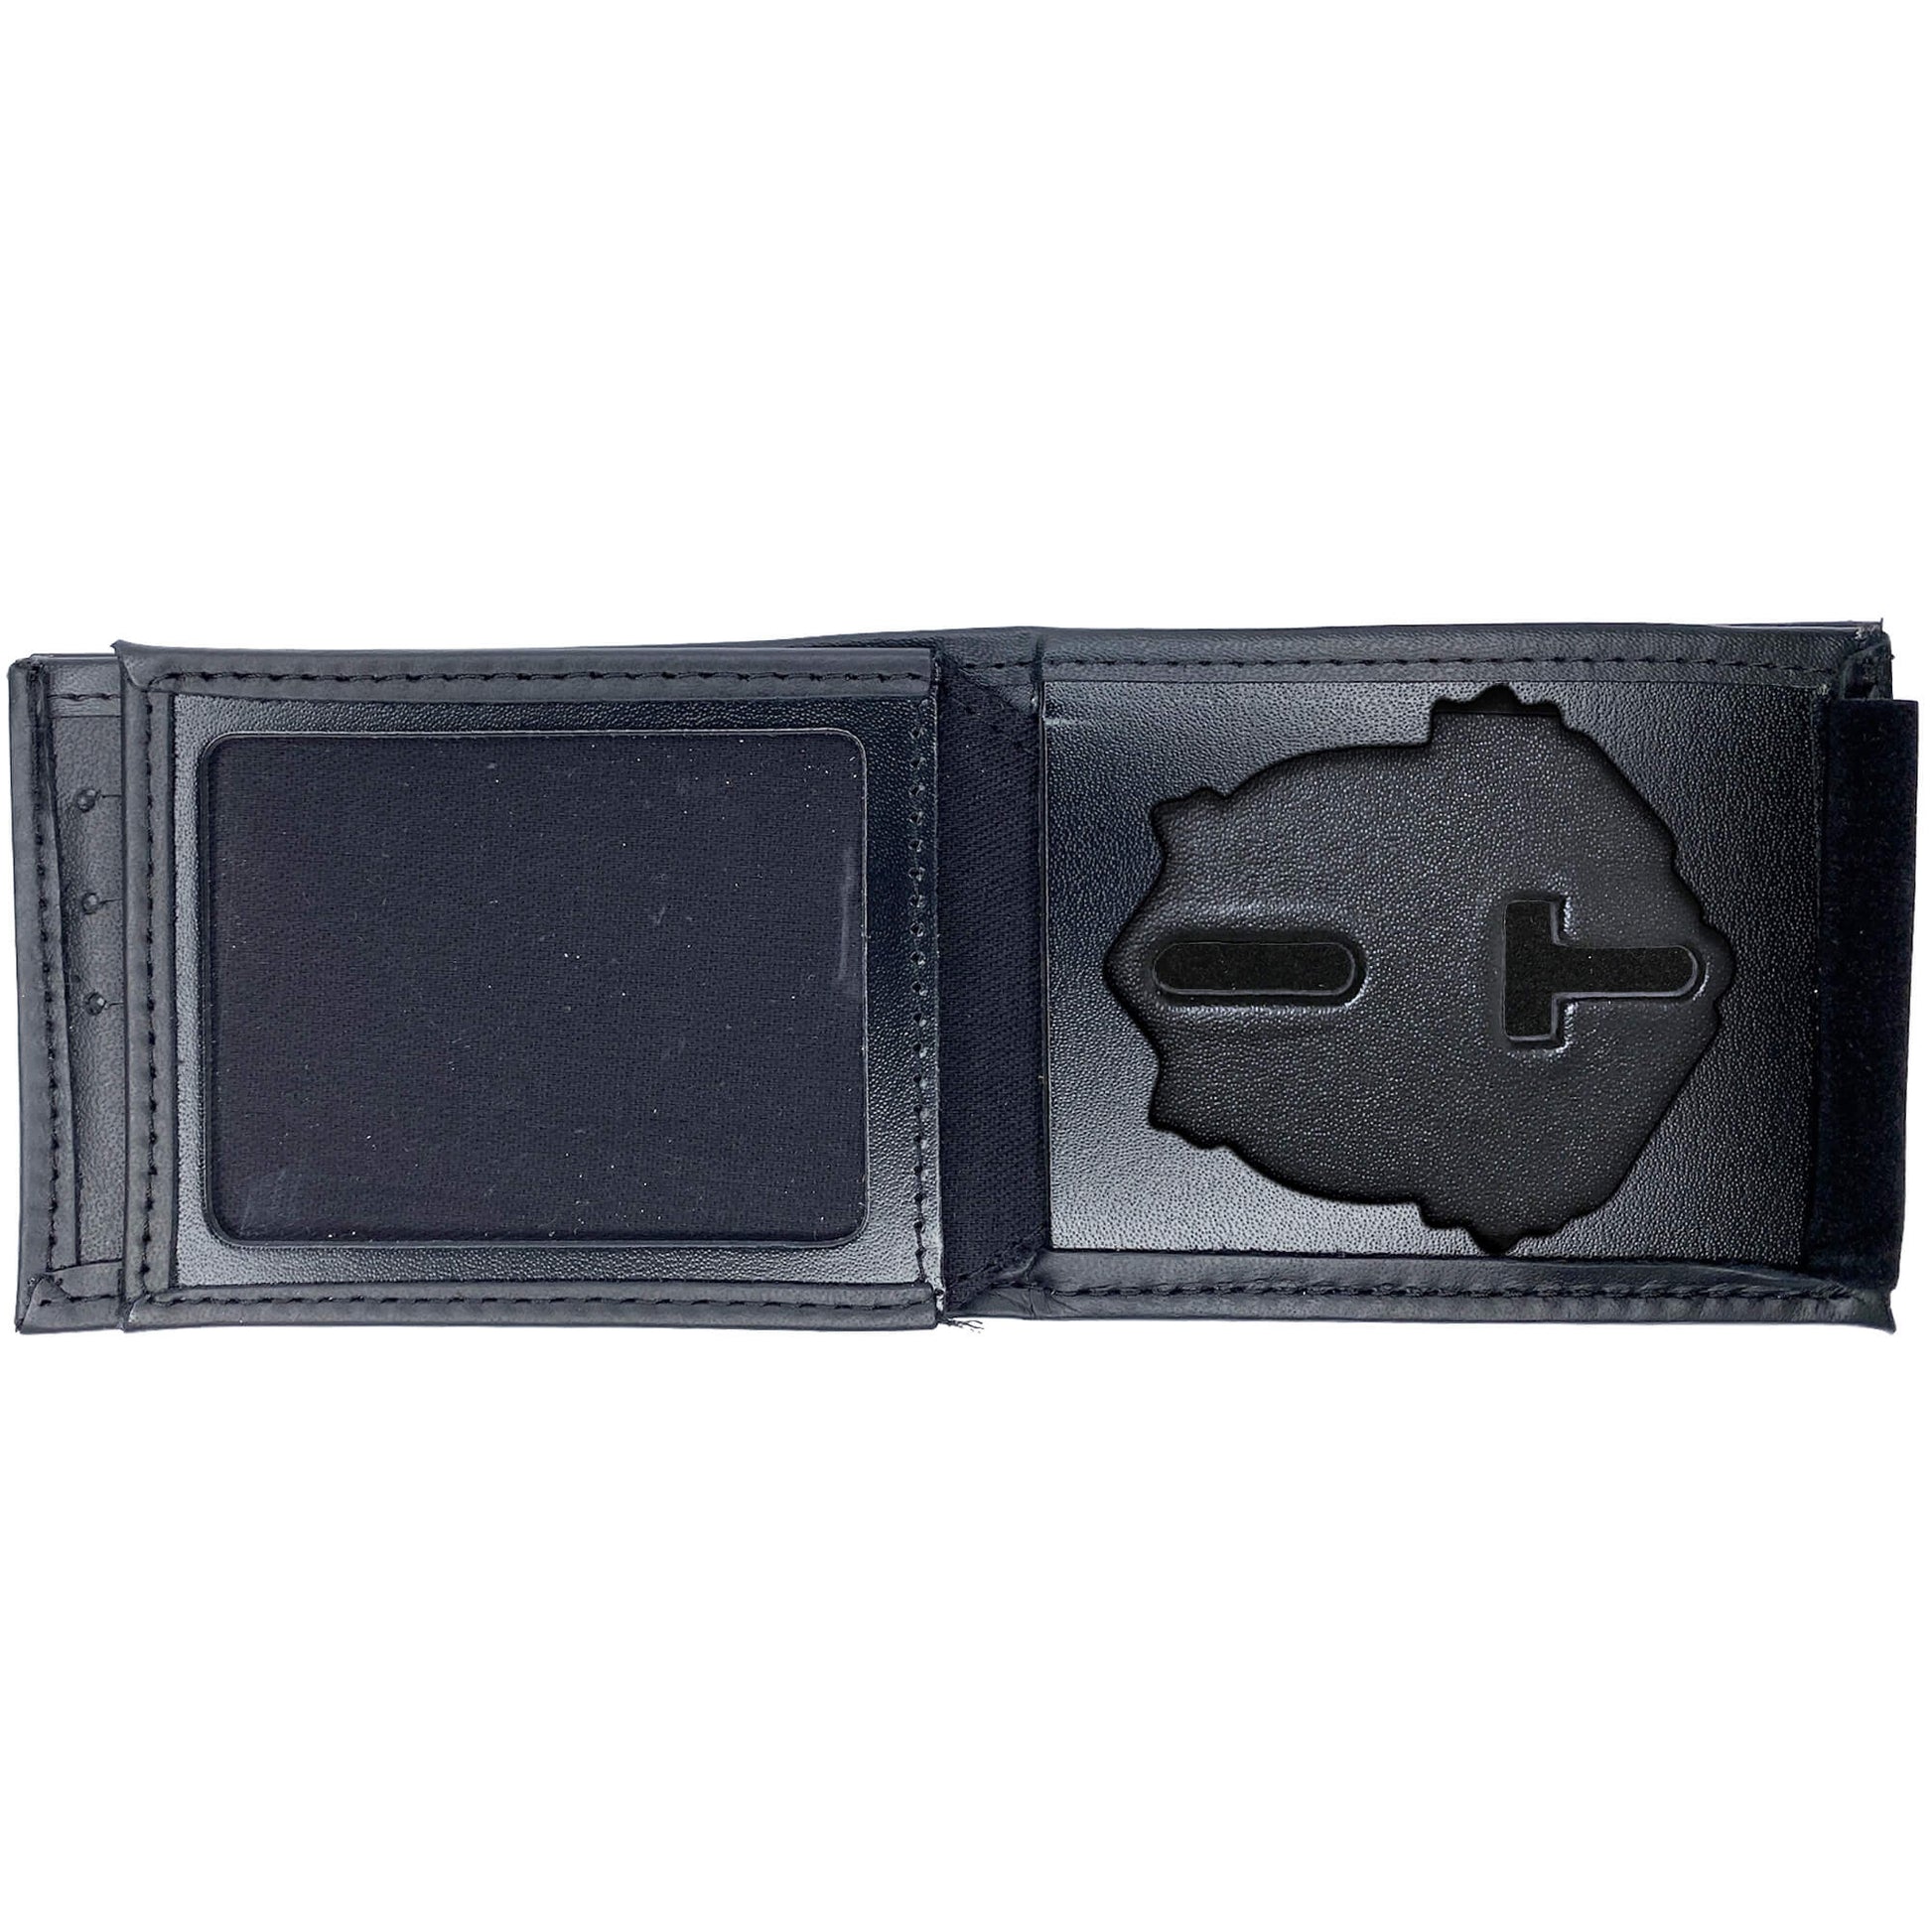 Alberta Security Officer Hidden Badge Wallet-Perfect Fit-911 Duty Gear Canada